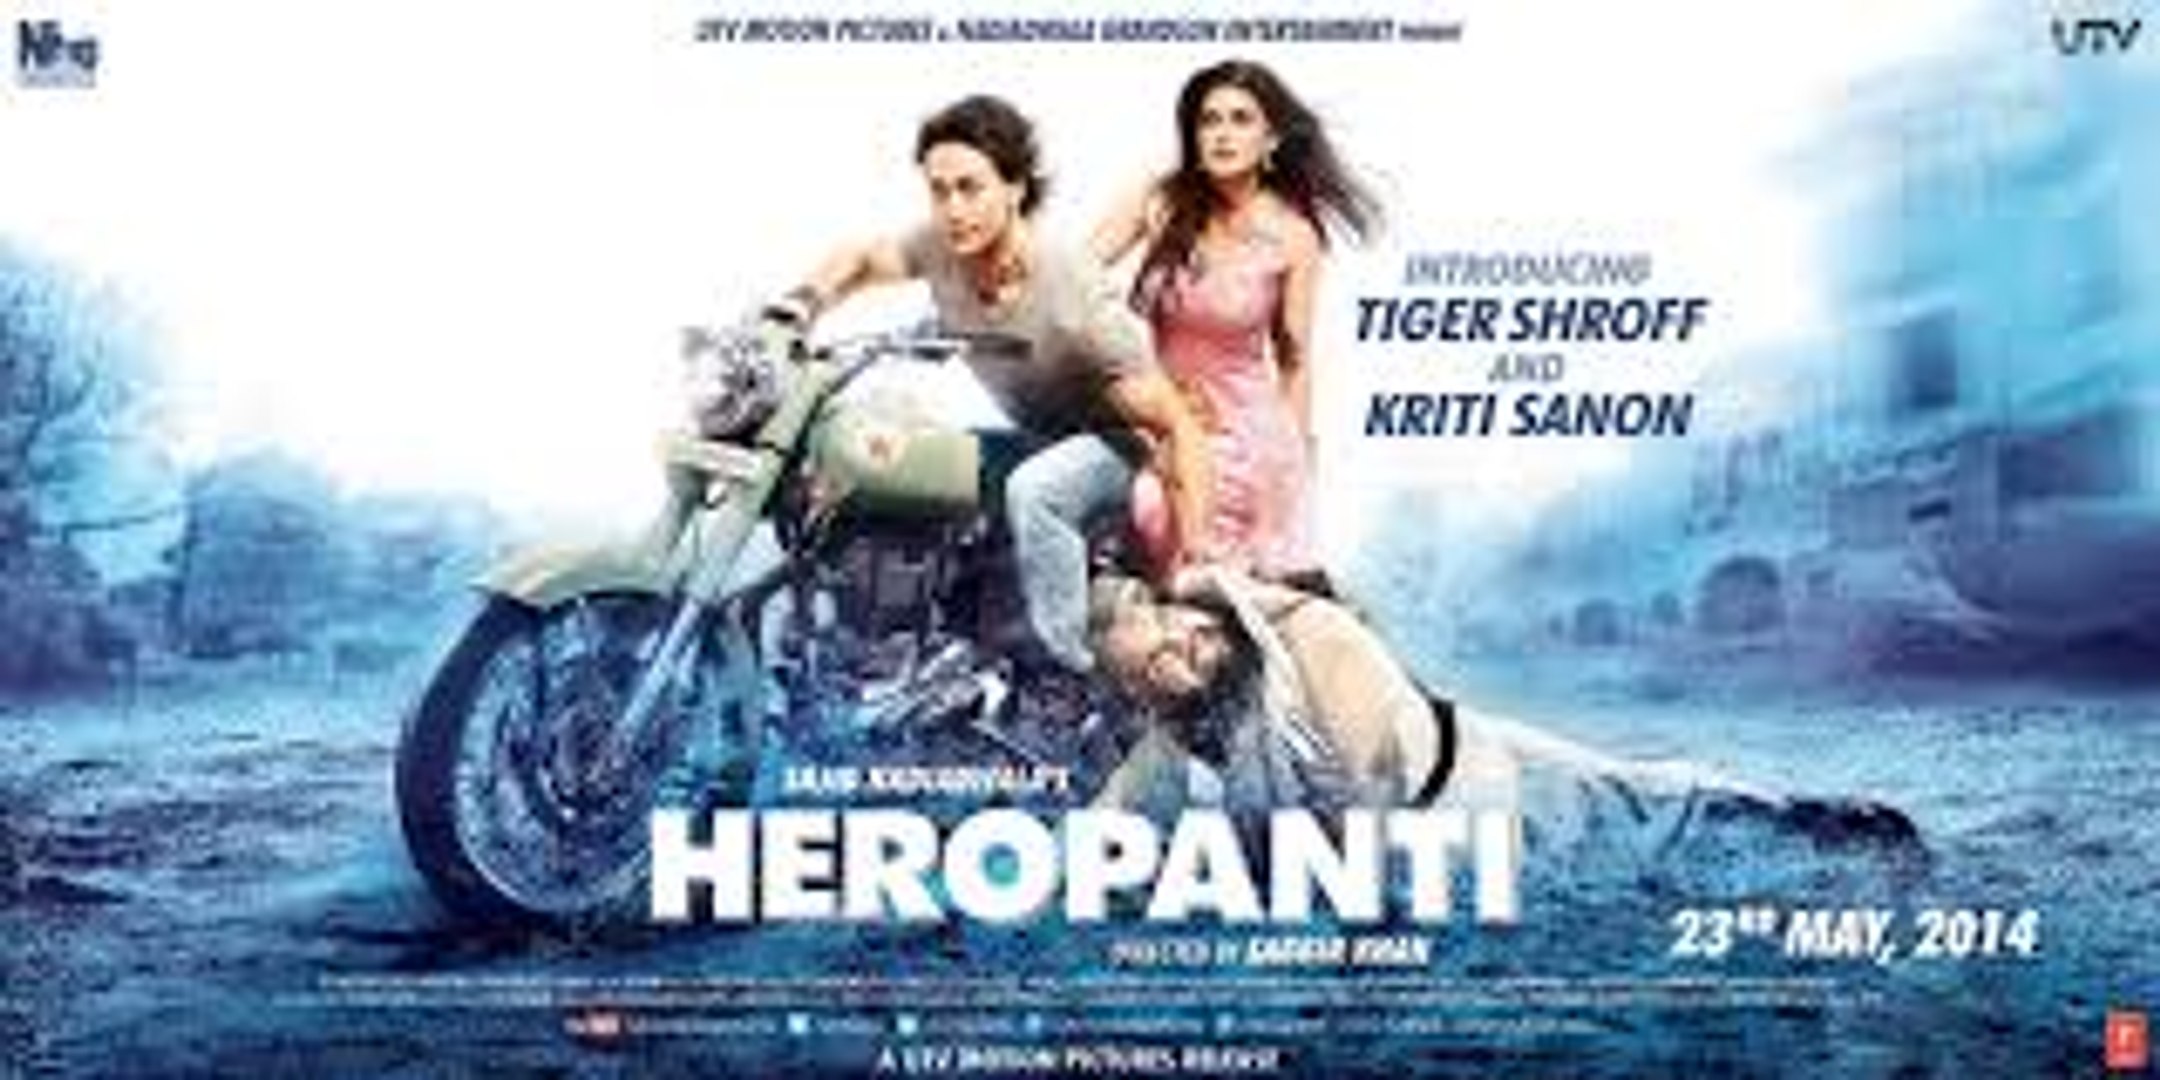 Heropanti 2014 Movie Mp4 Download (Latest Hindi Movie)